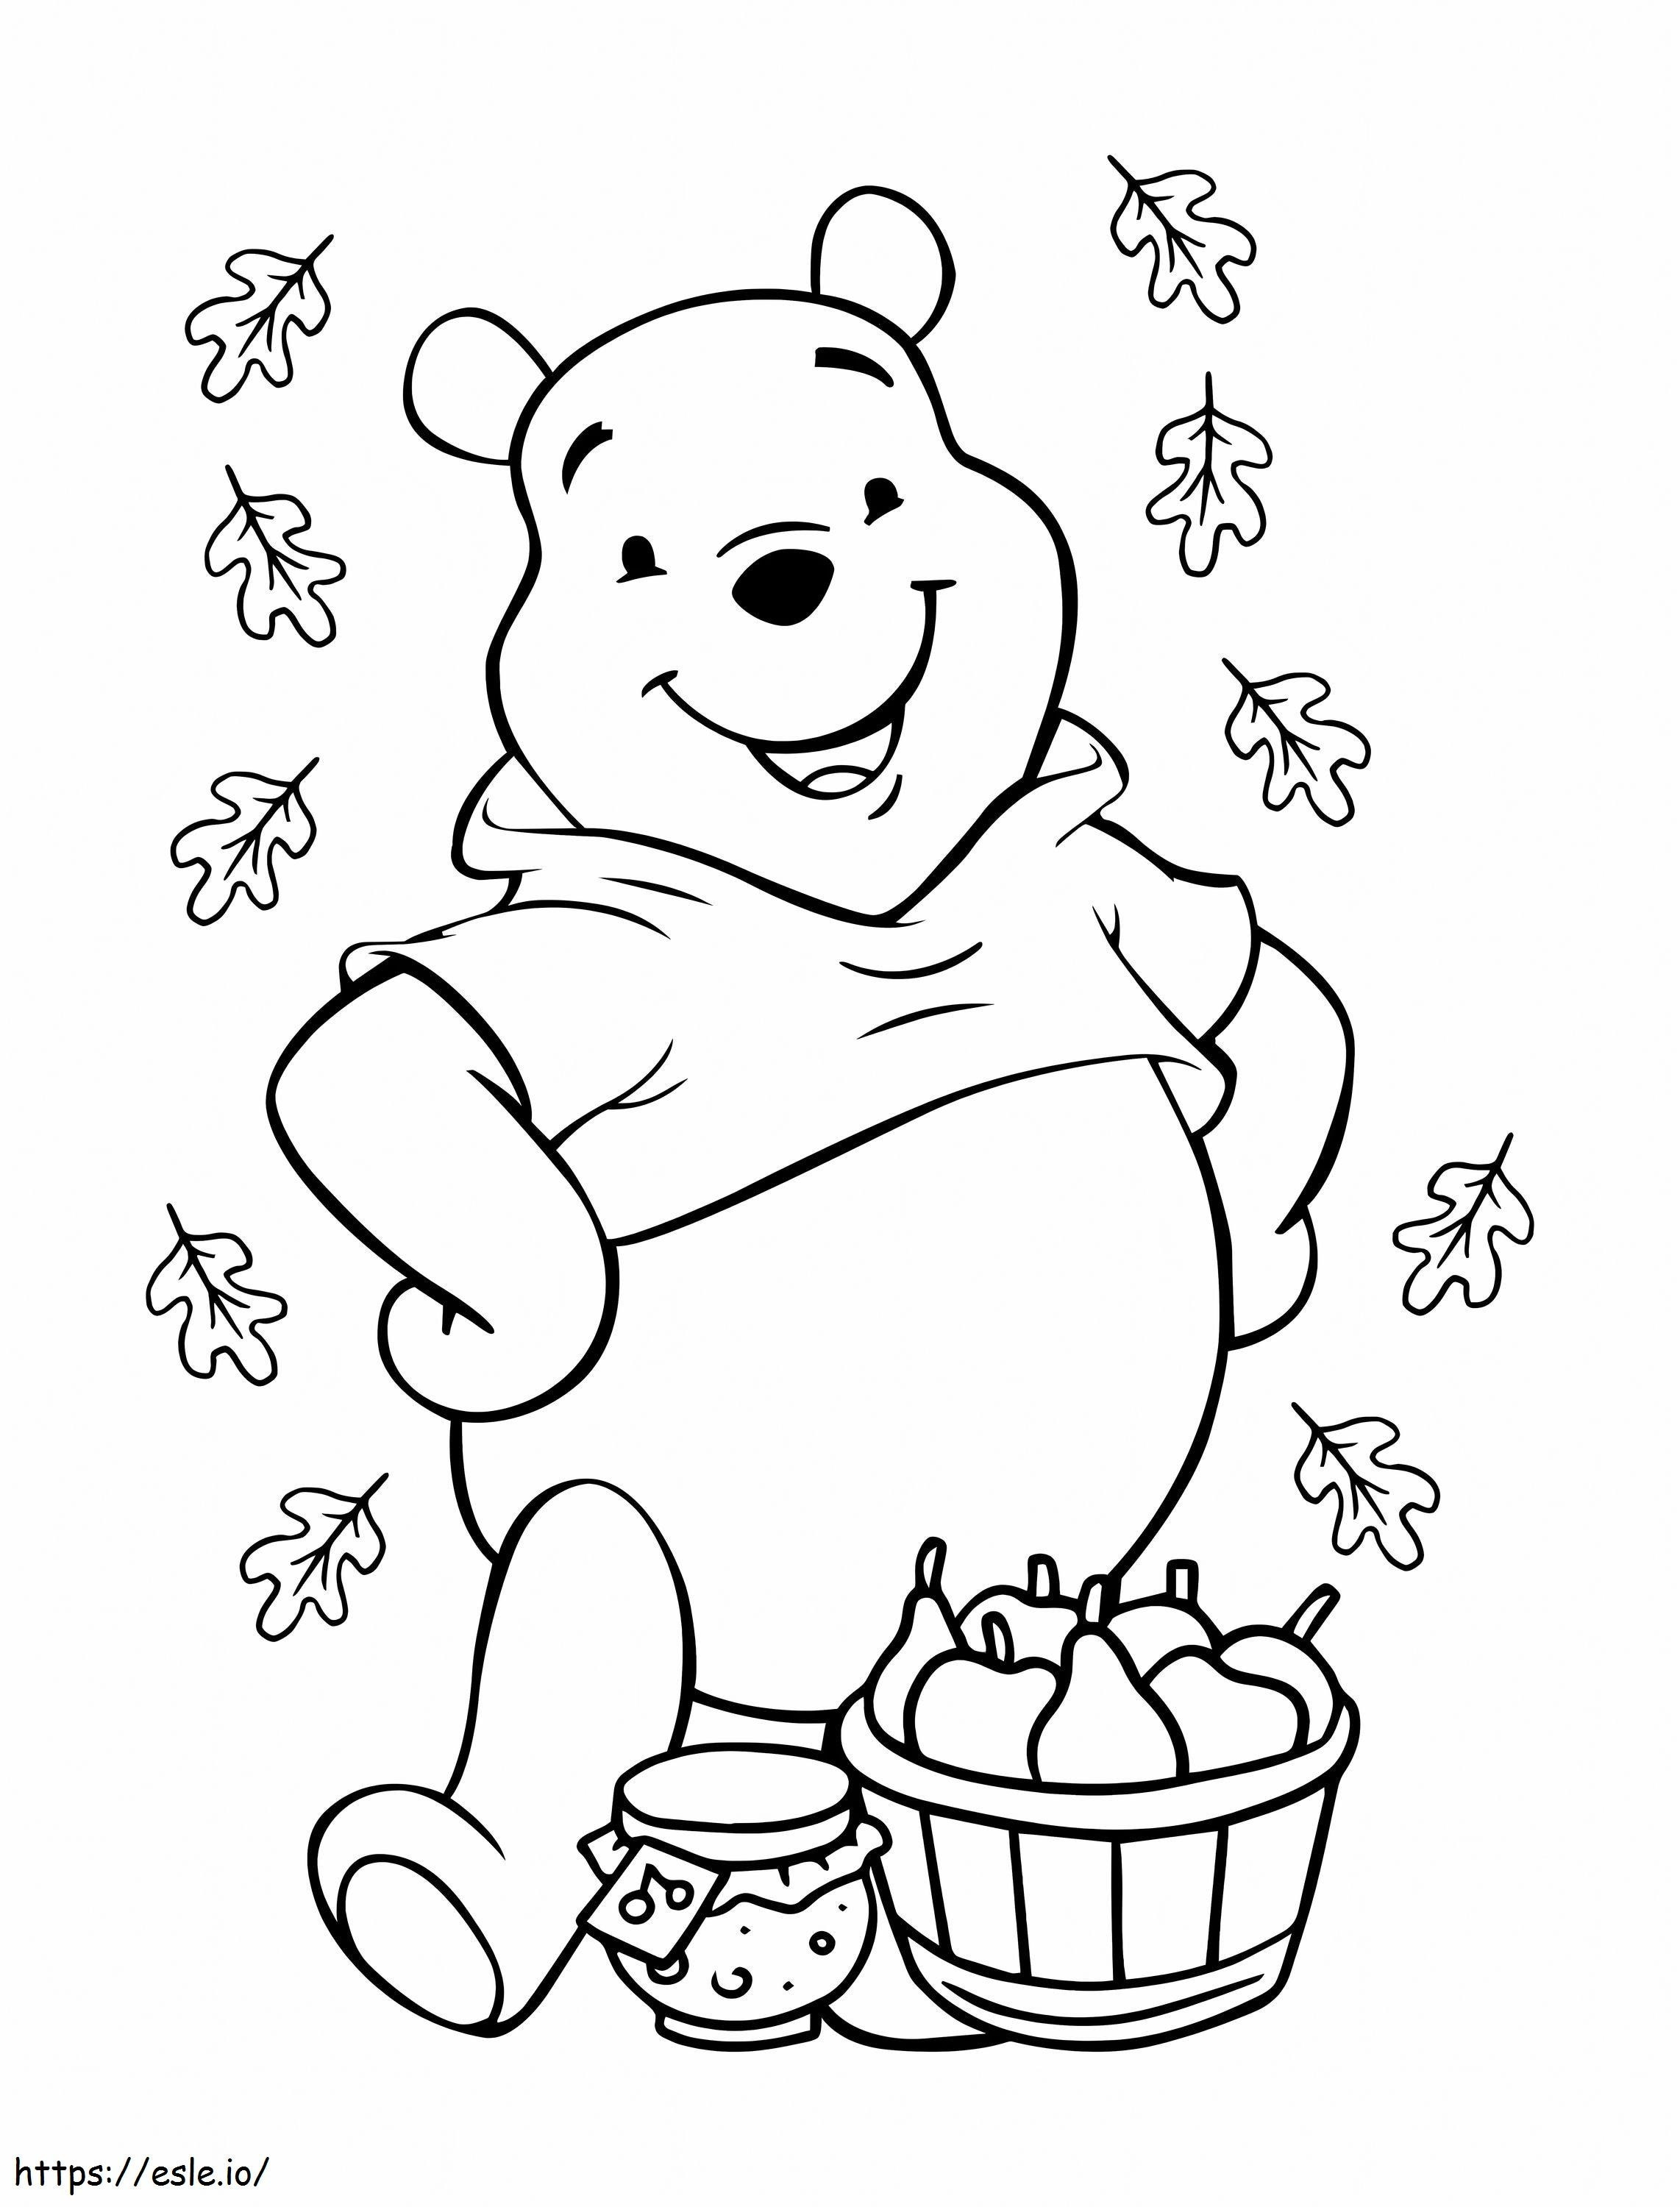 Pooh Bear Disney coloring page